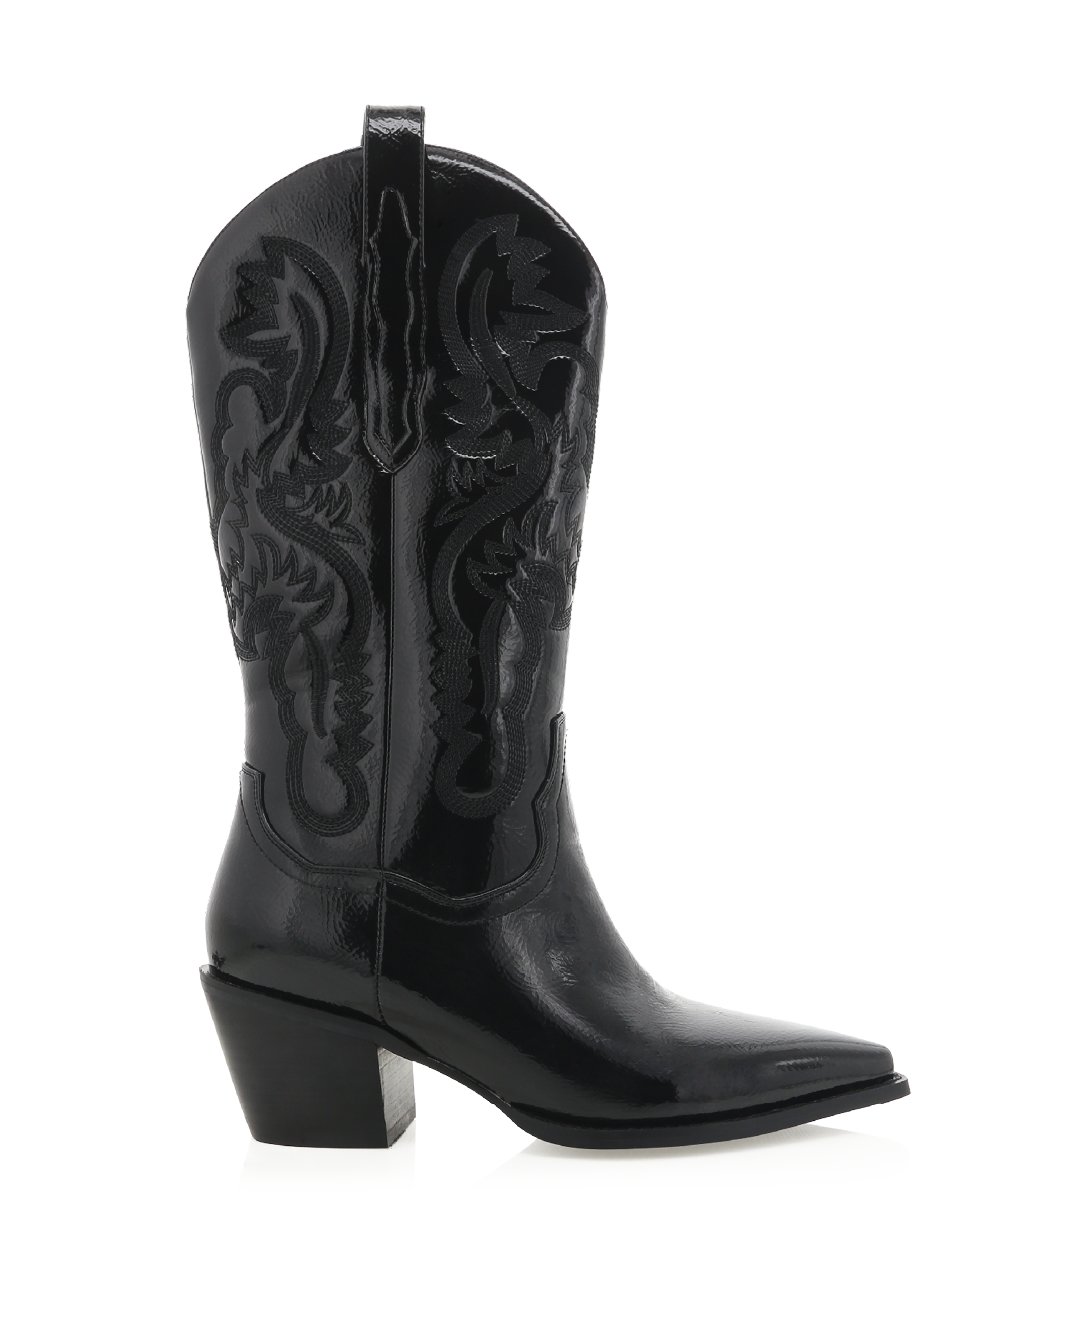 DANILO - BLACK CRINKLE PATENT-Boots-Billini-BILLINI USA